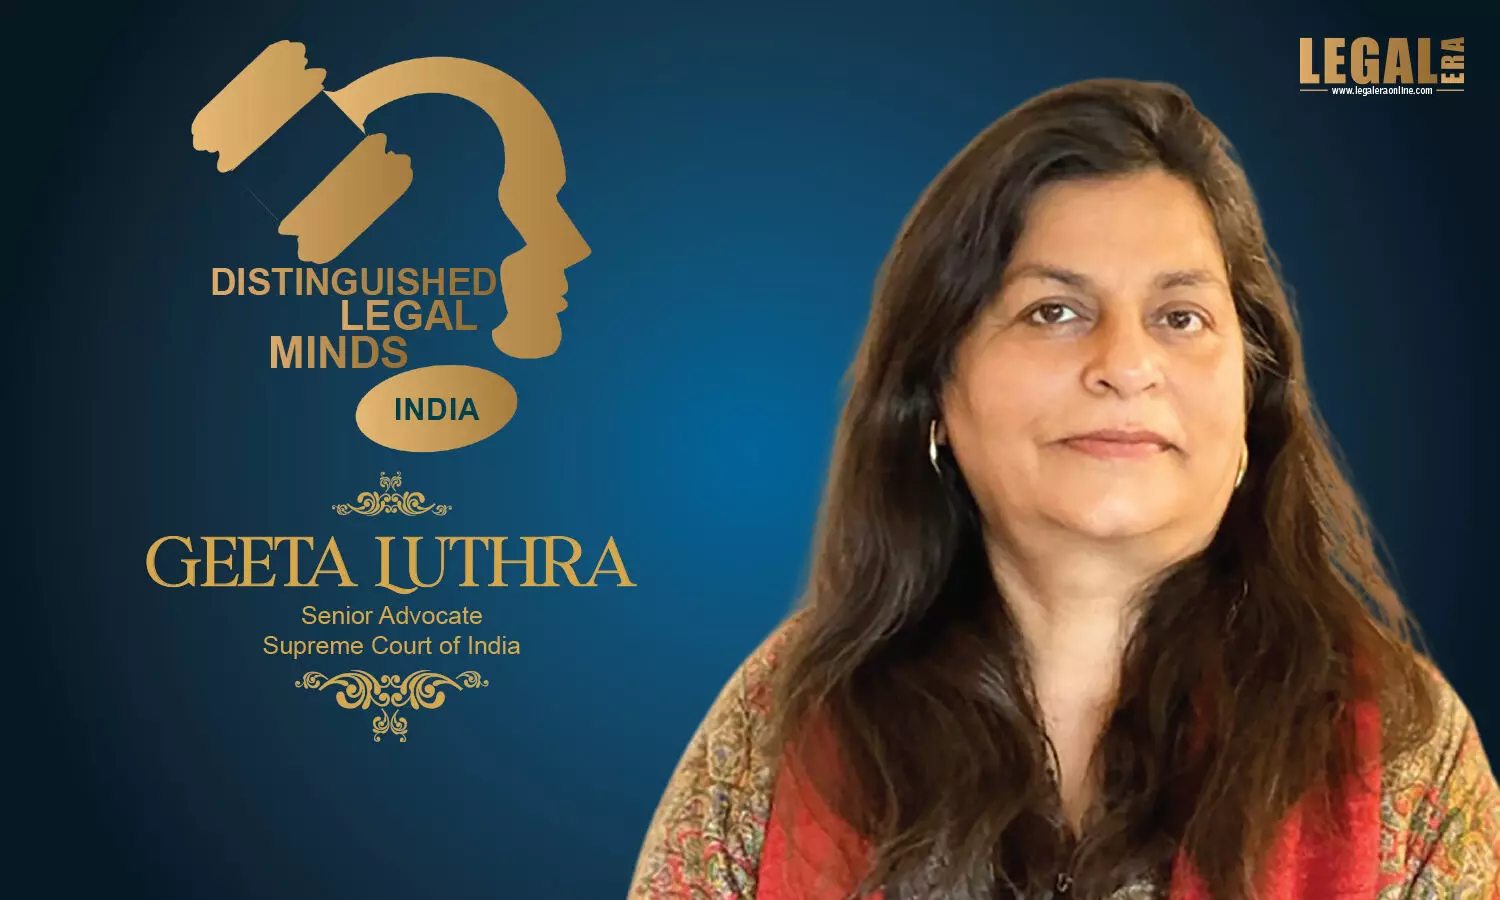 Geeta Luthra